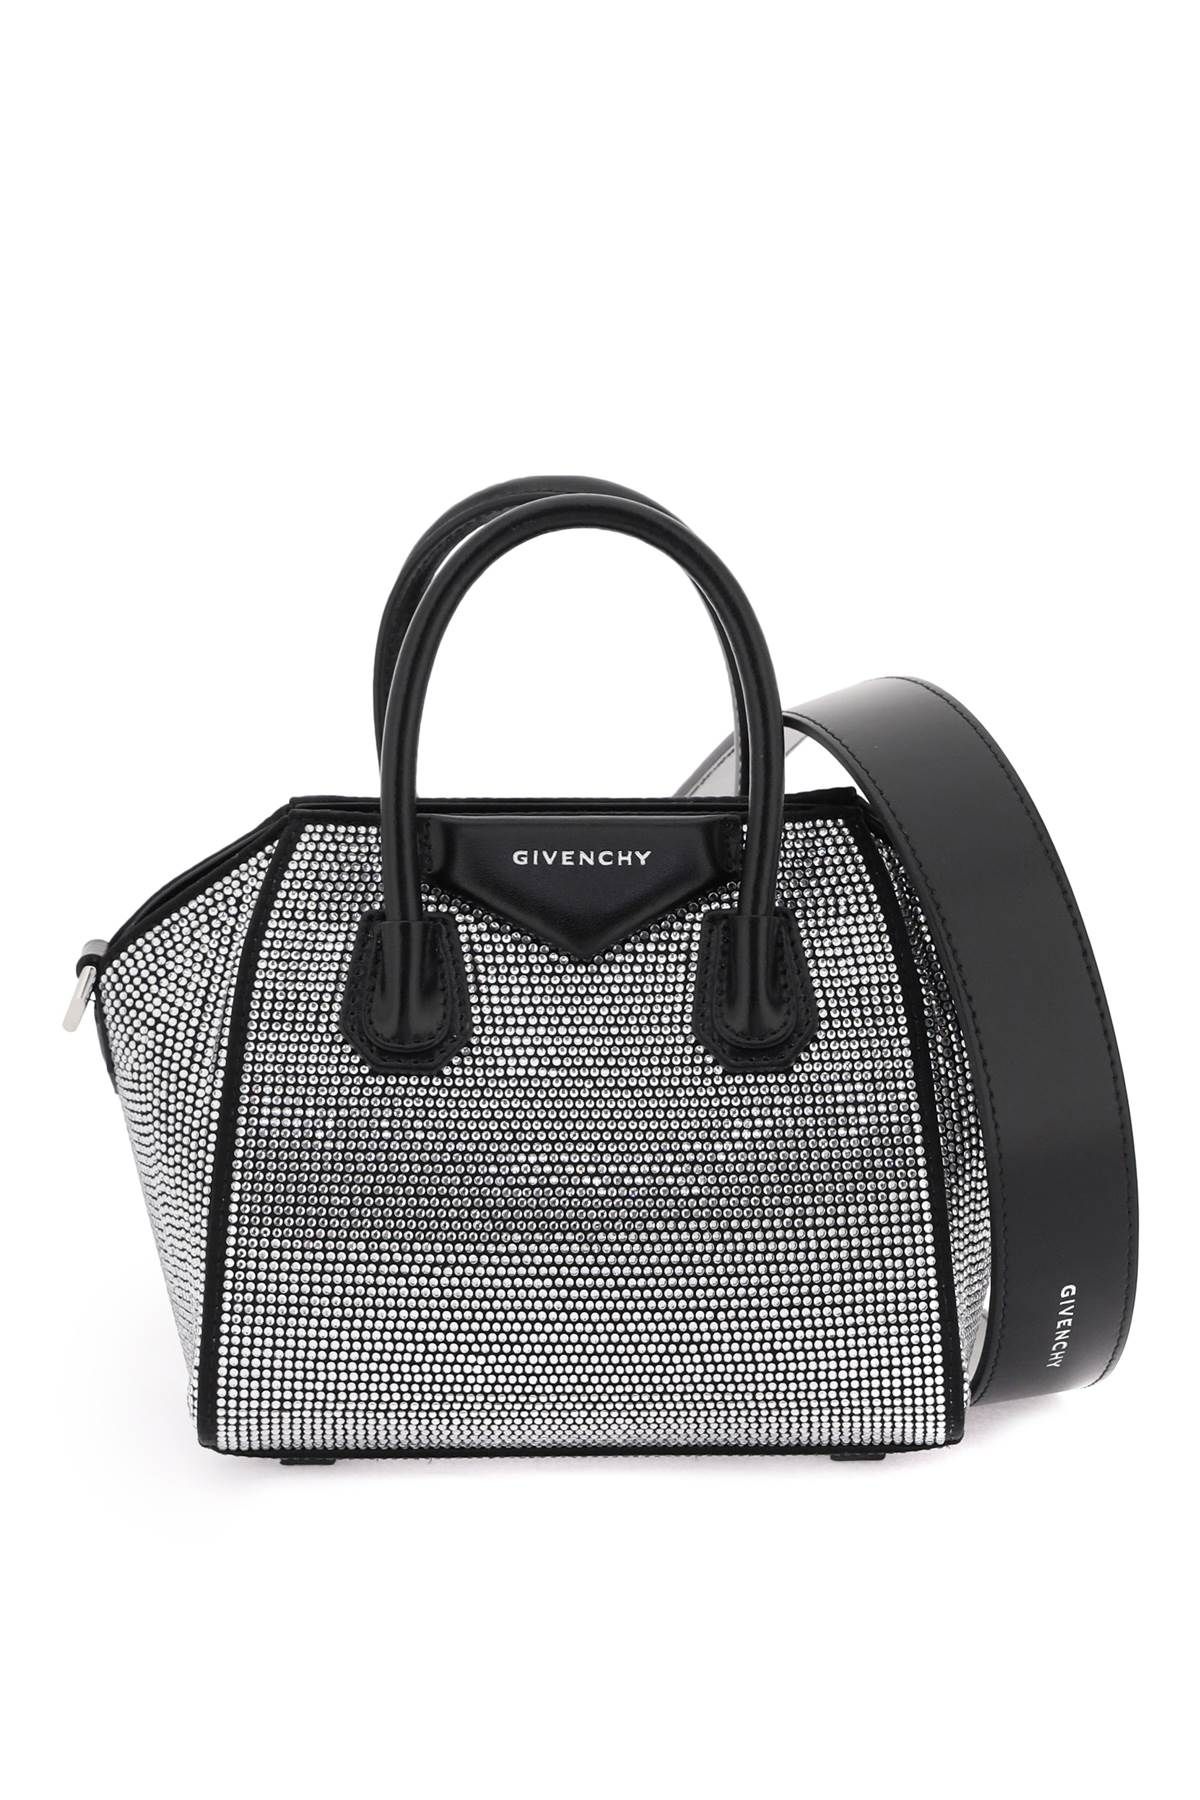 Givenchy 'antigona Toy' Bag With Rhinestones In Black,silver